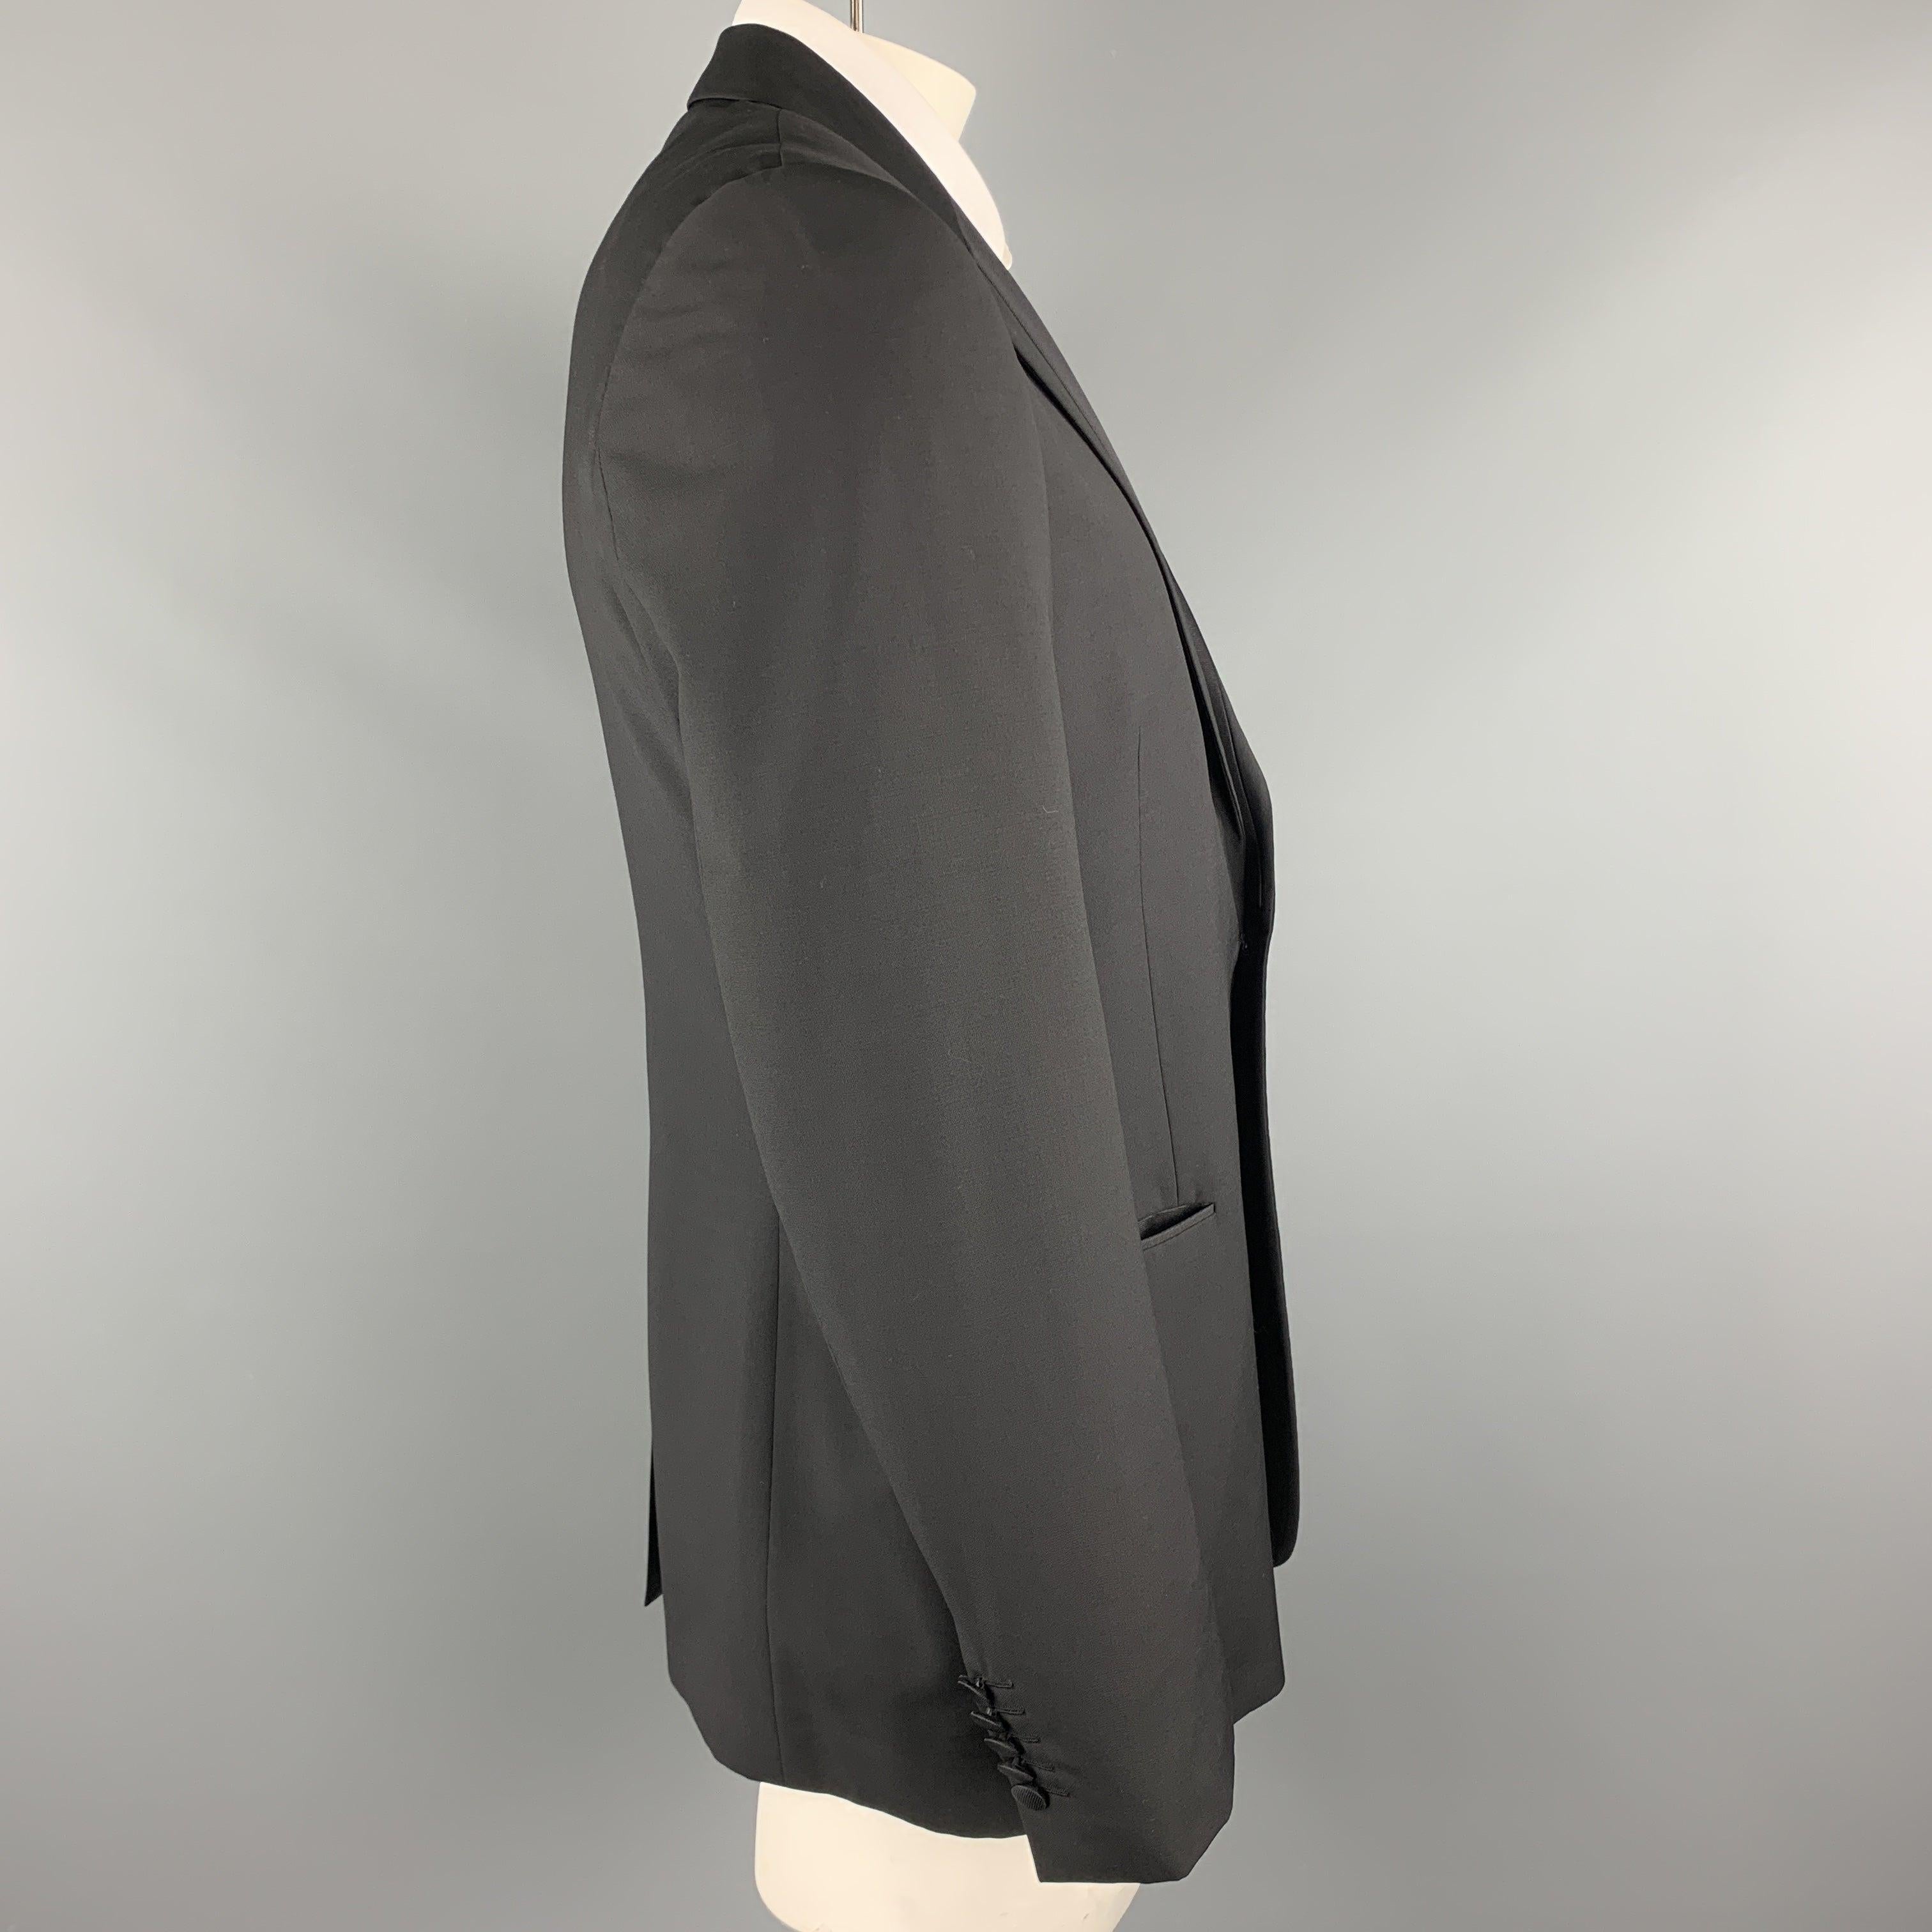 PAUL SMITH Size 42 Black Wool / Mohair Faille Detailed Peak Lapel Sport Coat For Sale 1